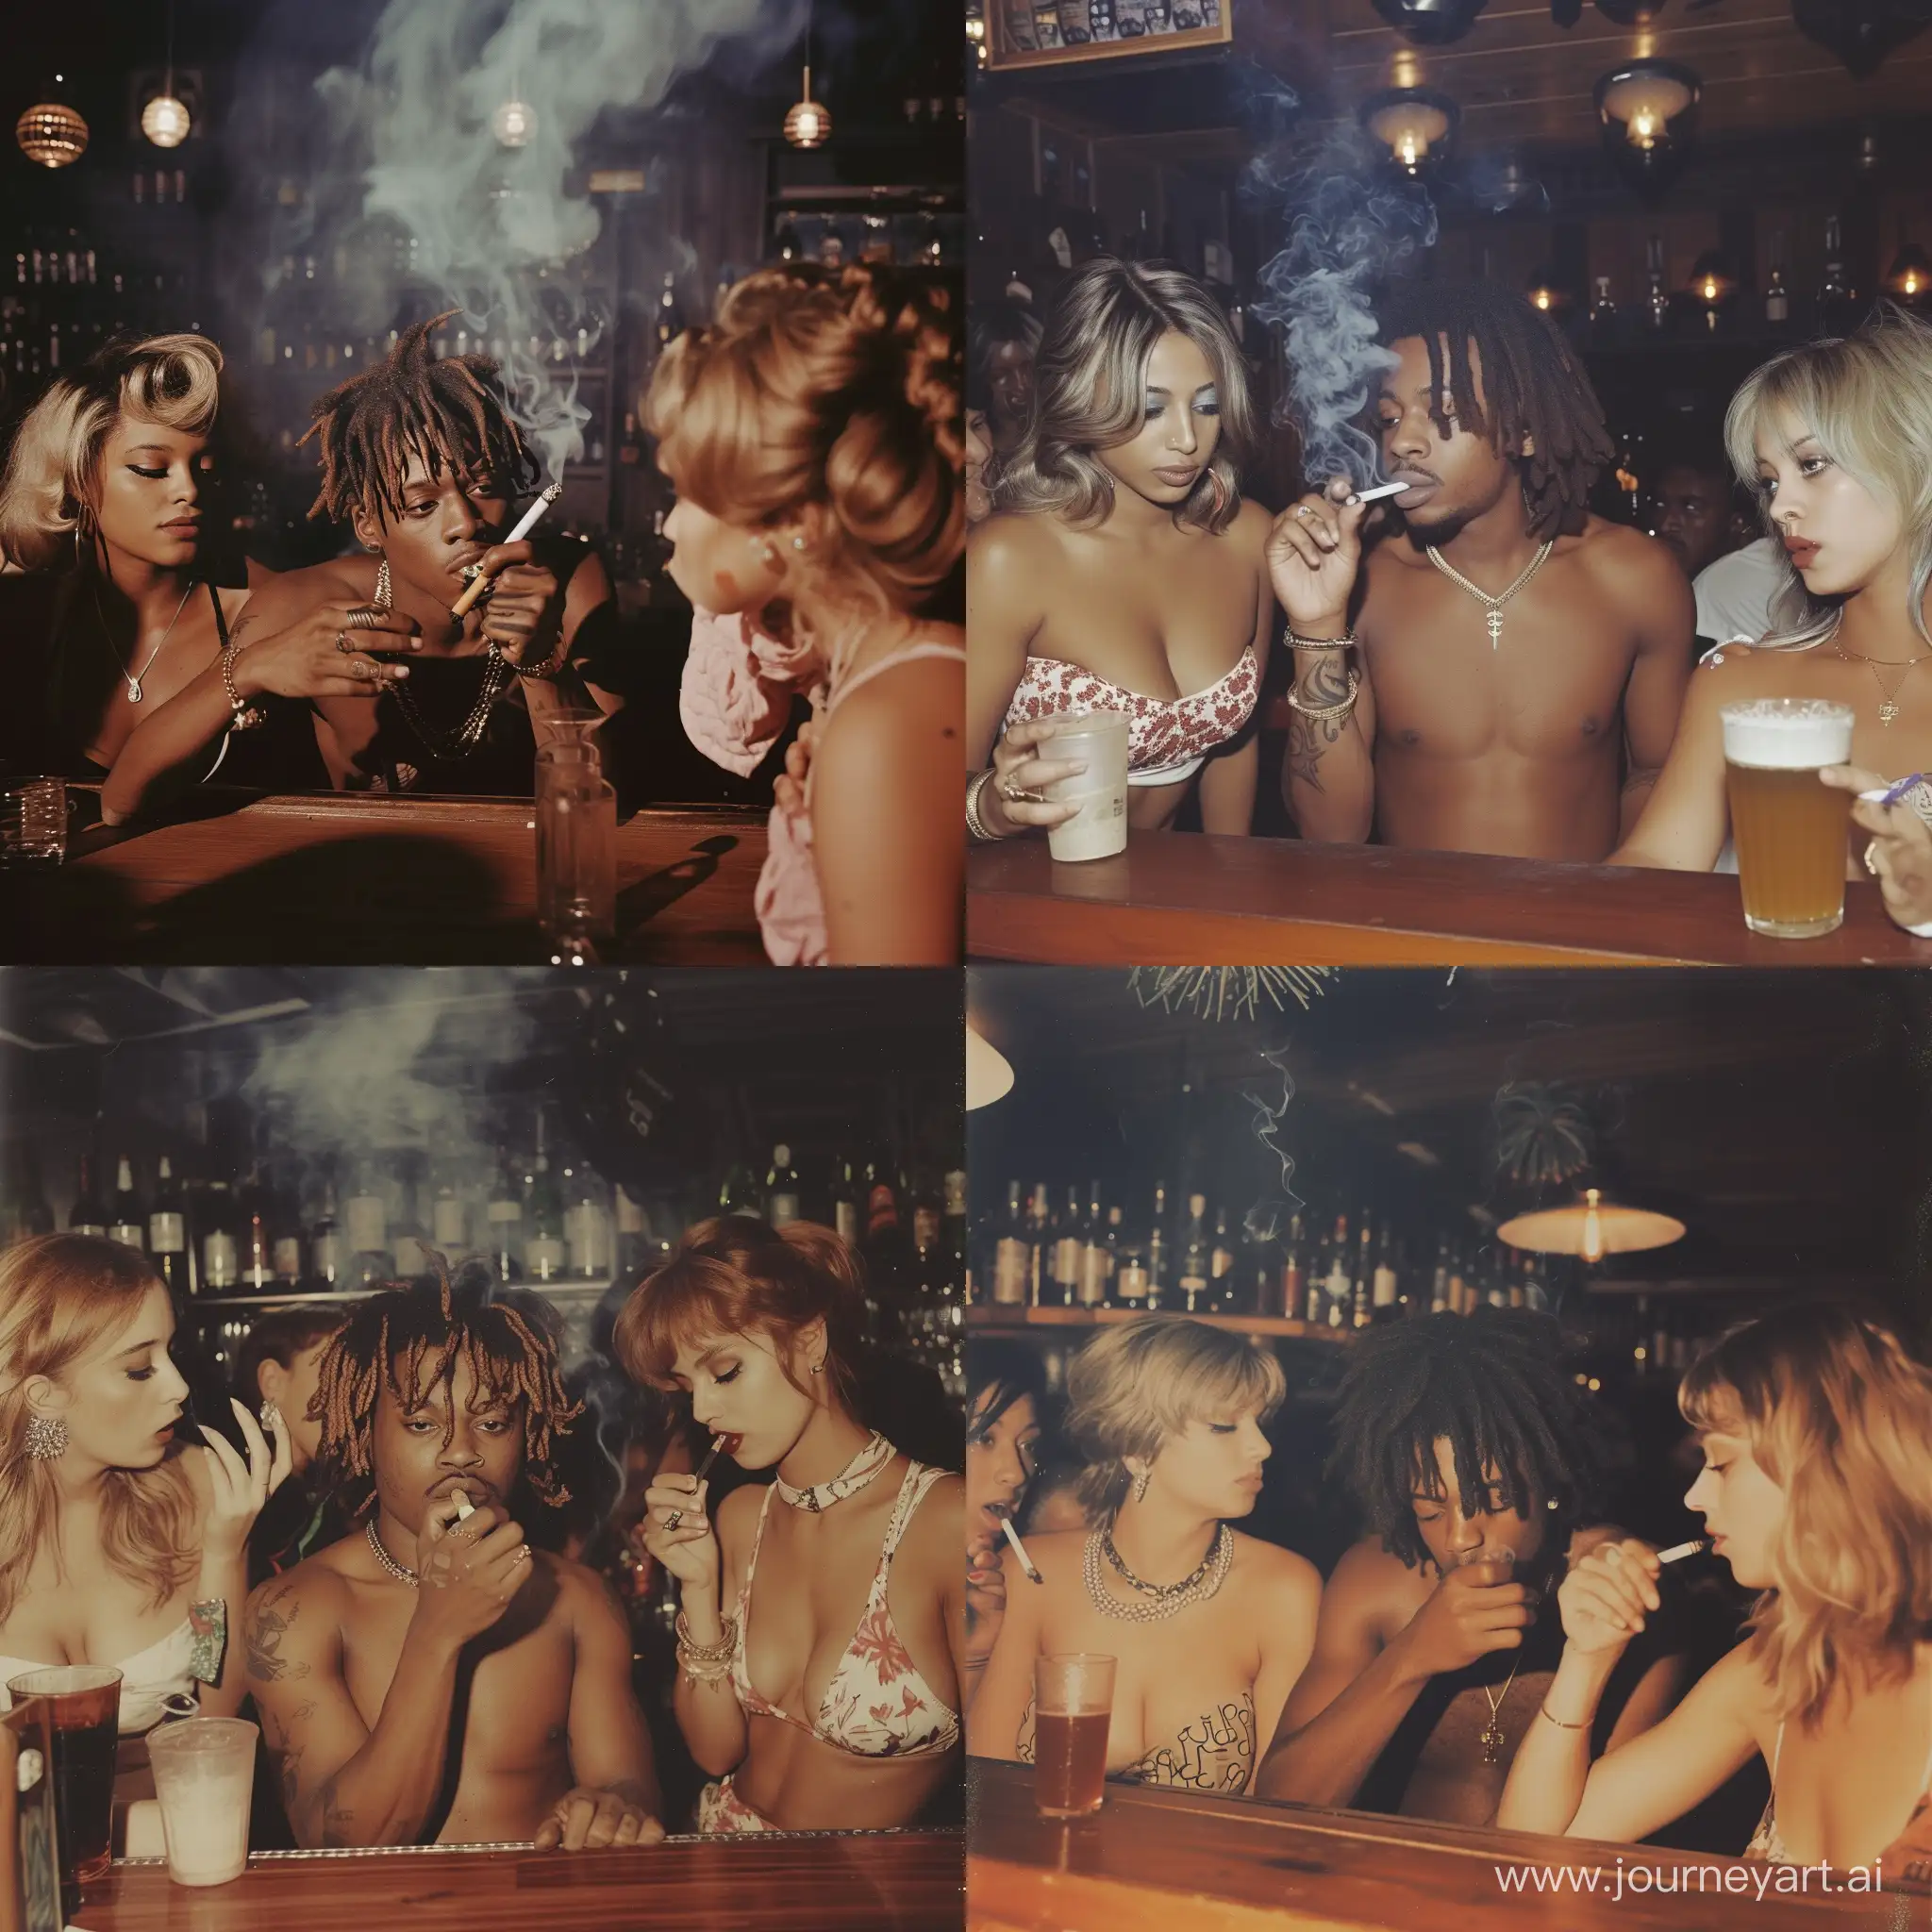 Juice-WRLD-1960s-Bar-Scene-with-Women-Smoking